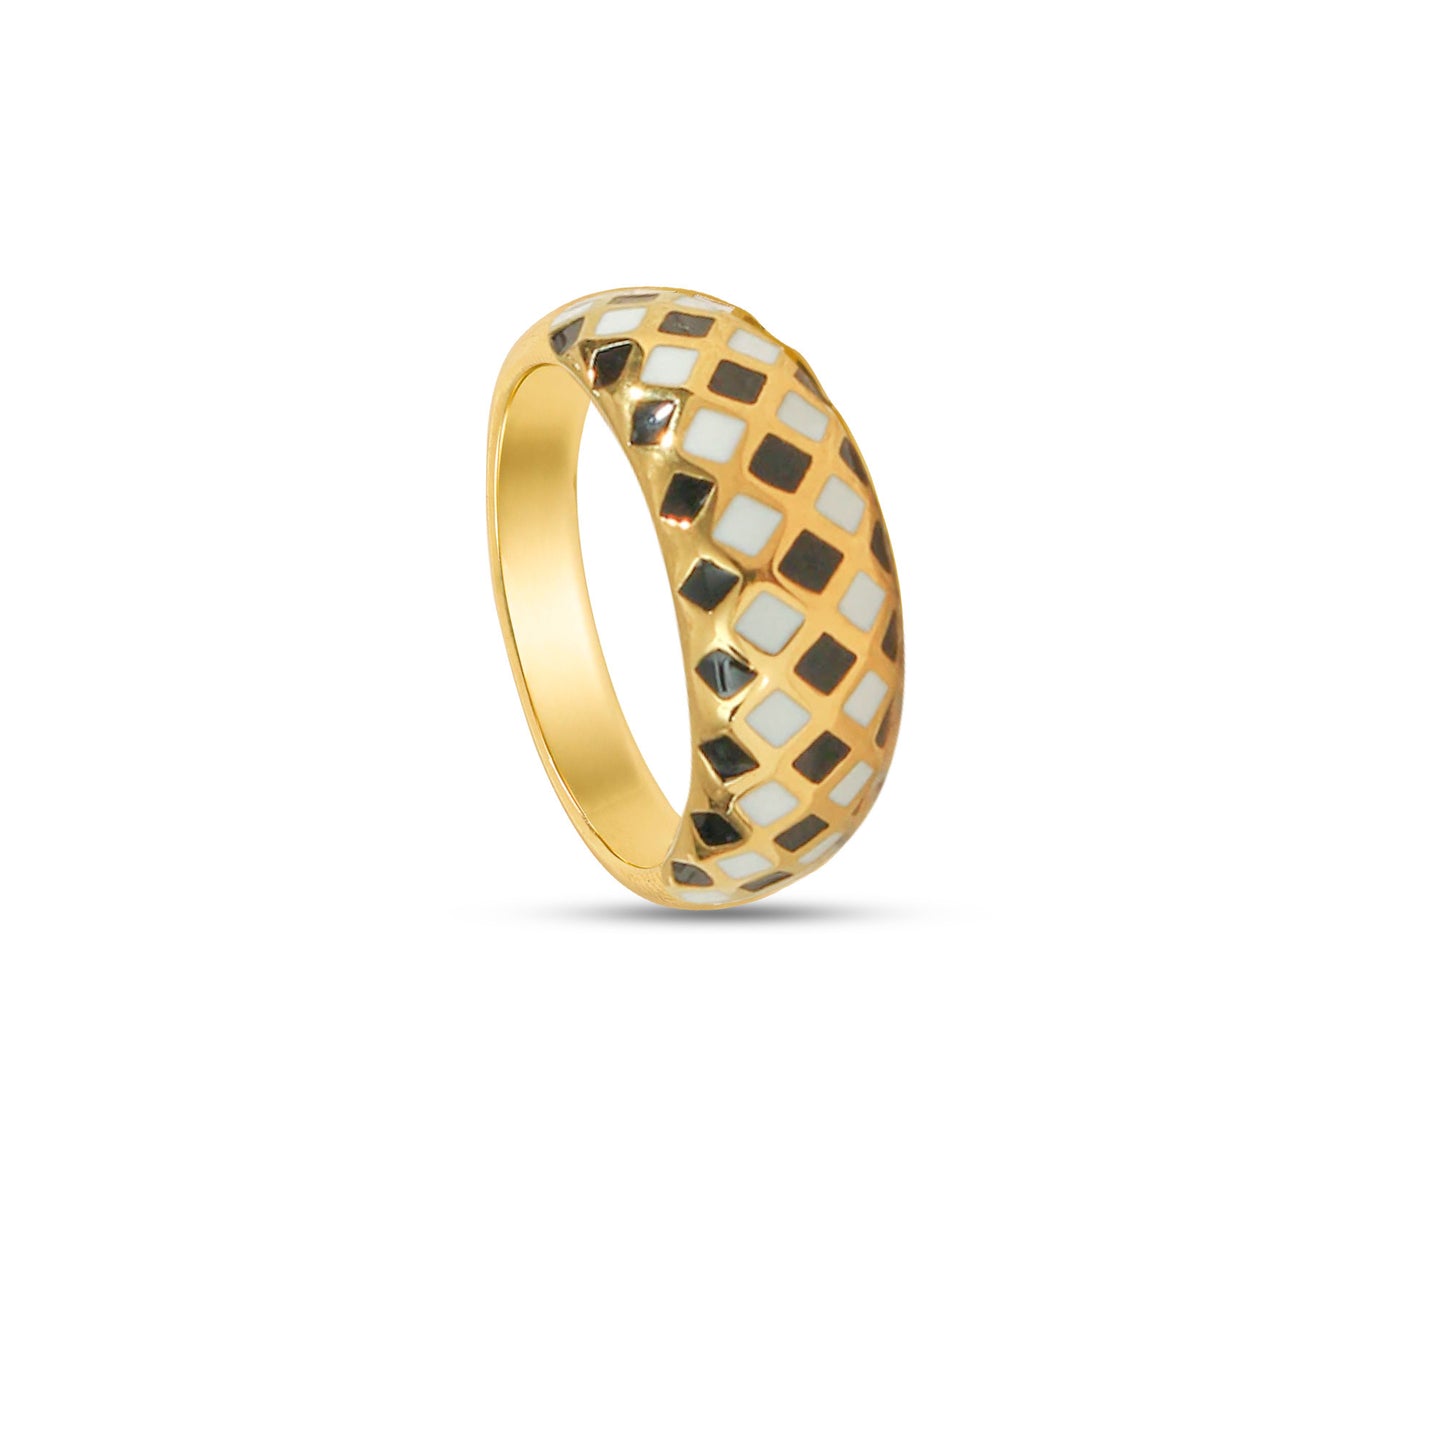 The Toni Checkered Ring